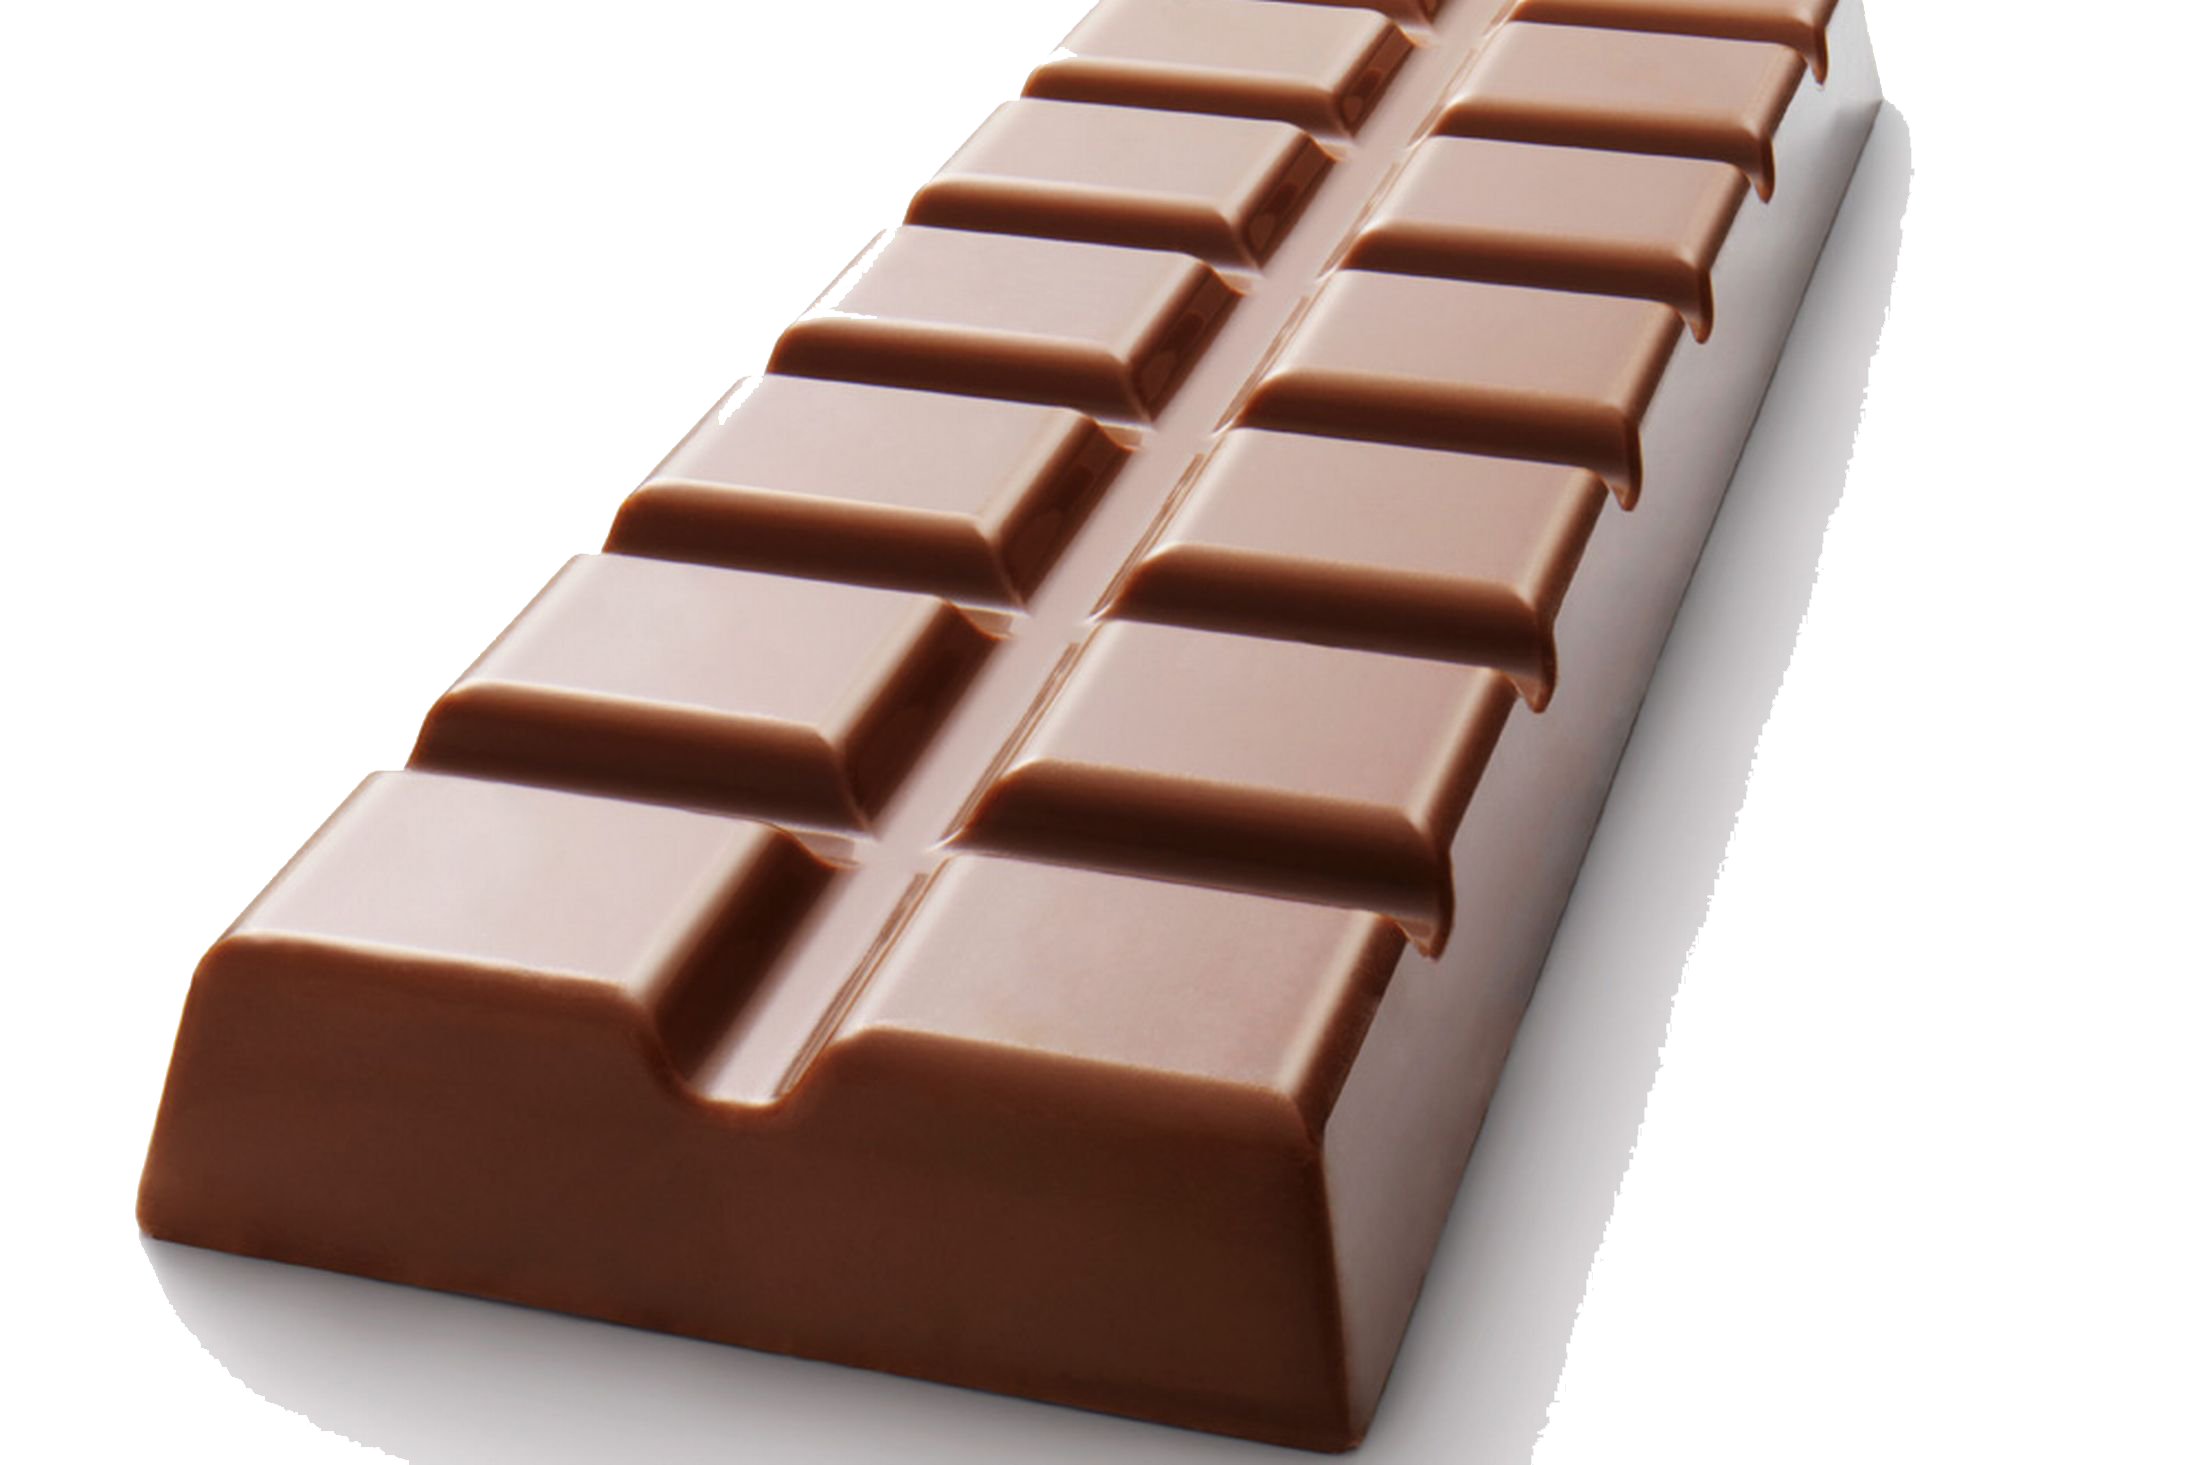 Chocolate Bar Png Image - Chocolate Bar, Transparent background PNG HD thumbnail